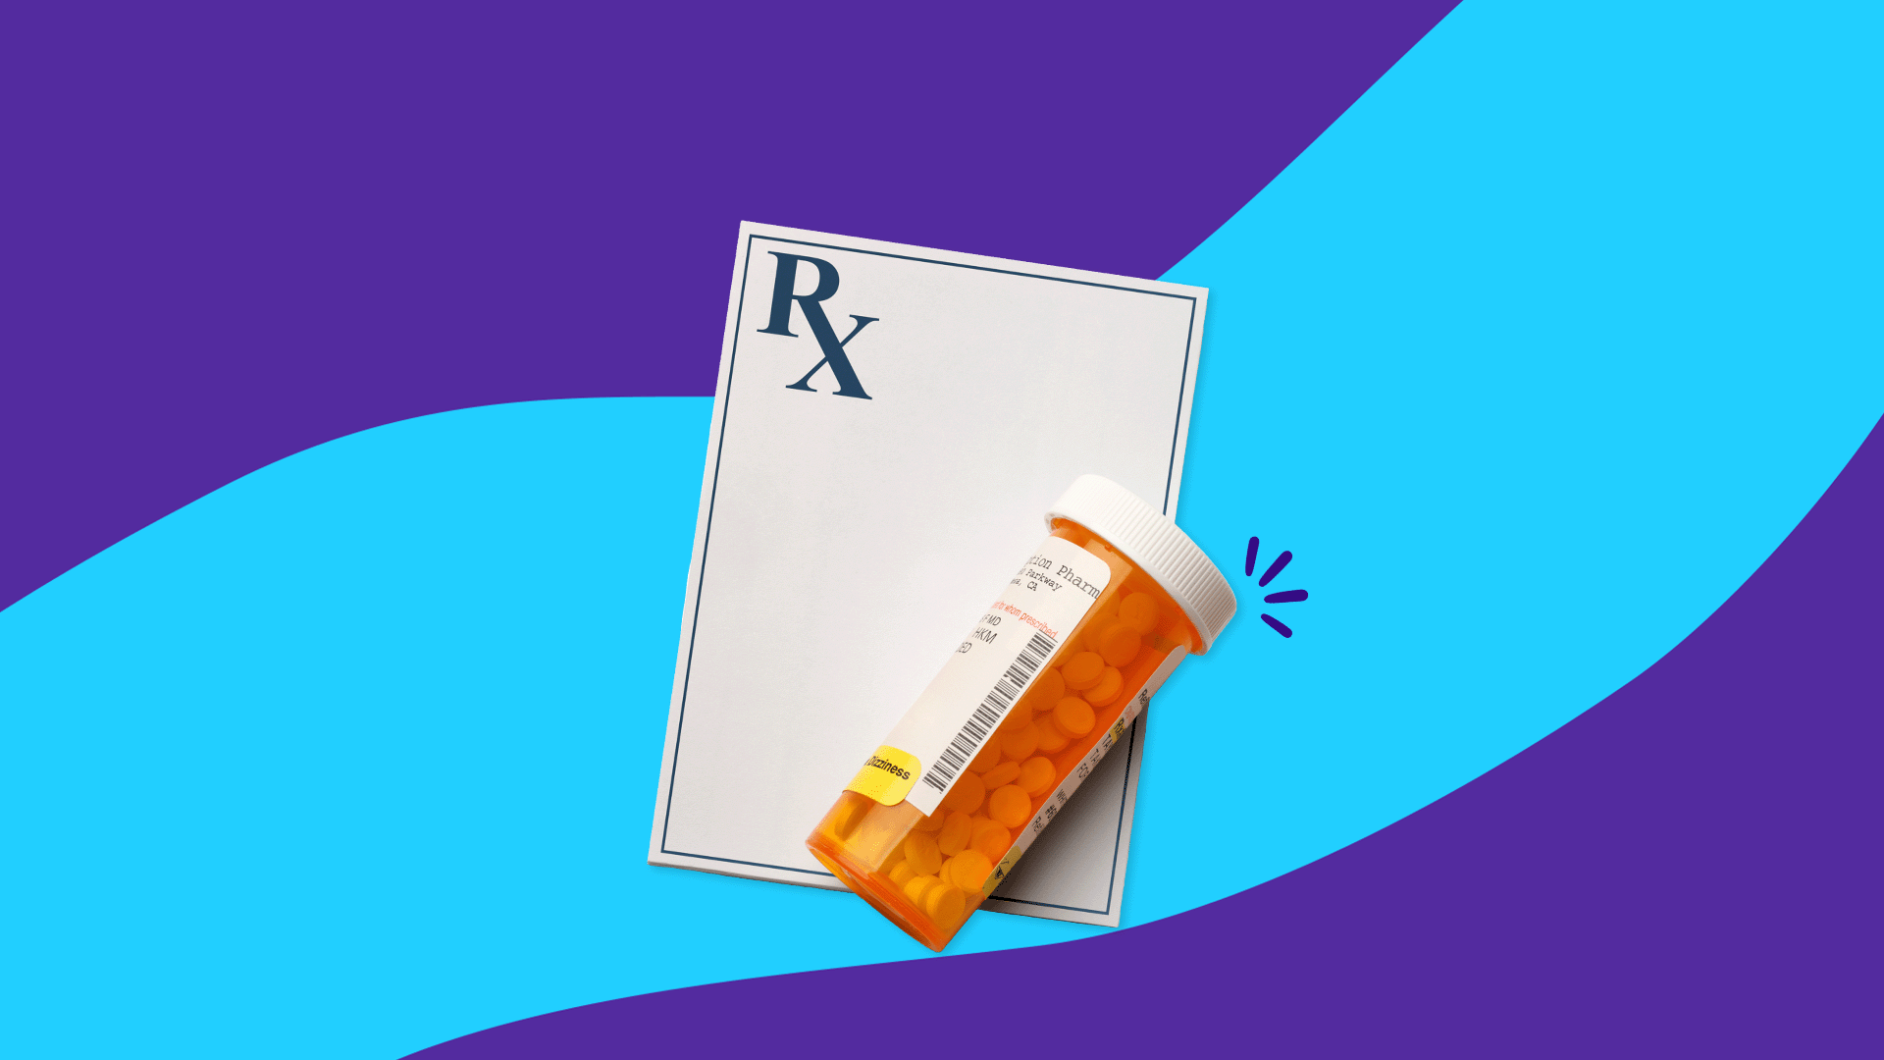 Rx prescription pad and Rx pill bottle: Crestor generic